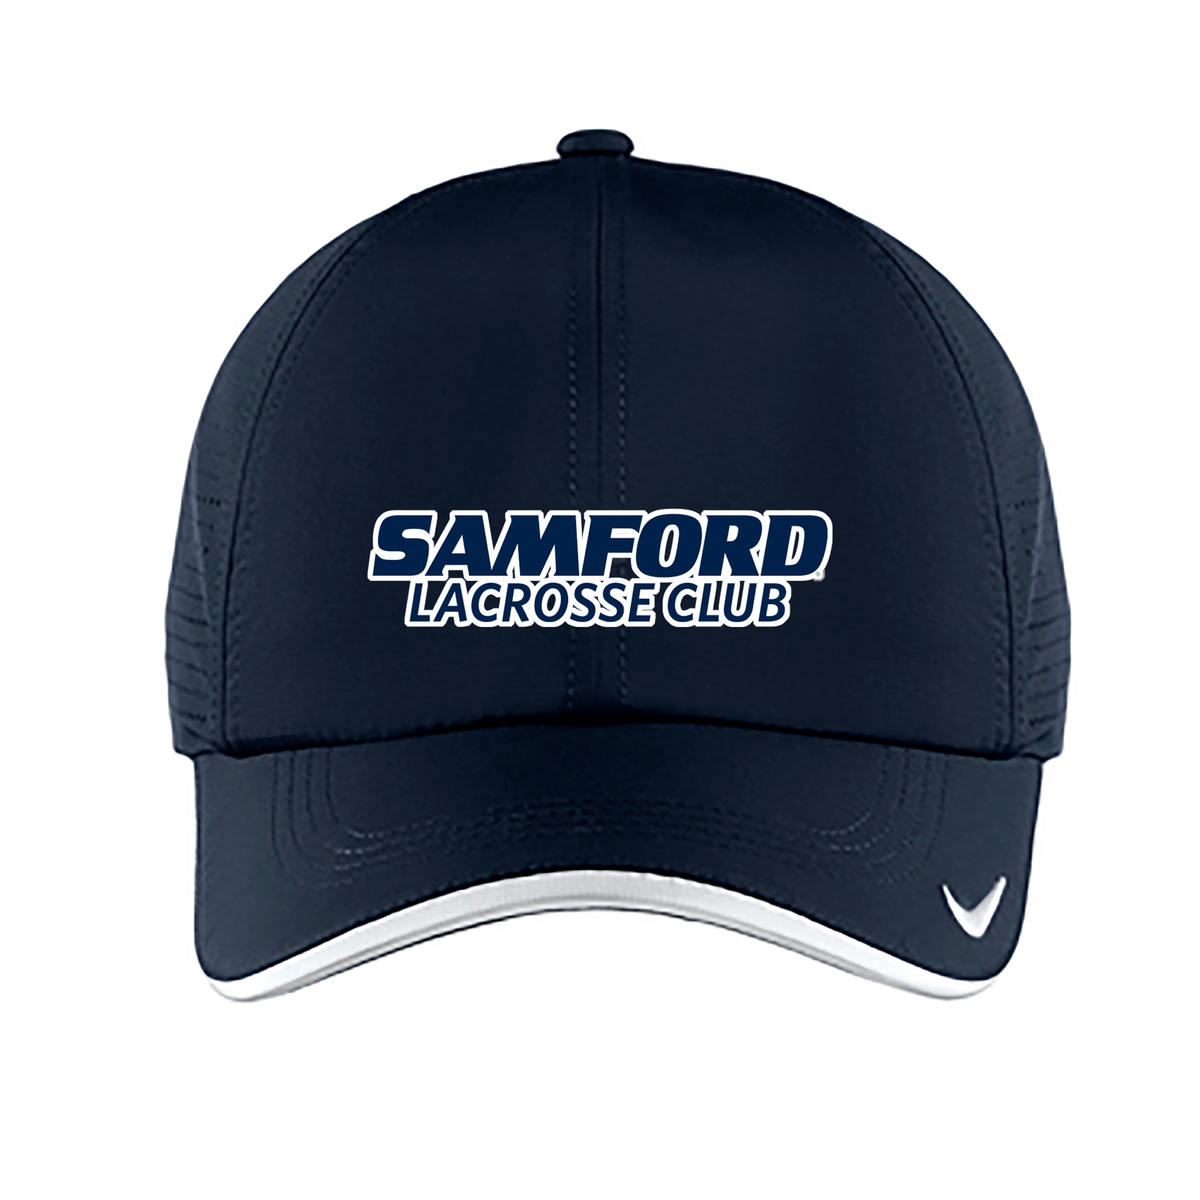 Samford University Lacrosse Club Nike Swoosh Cap